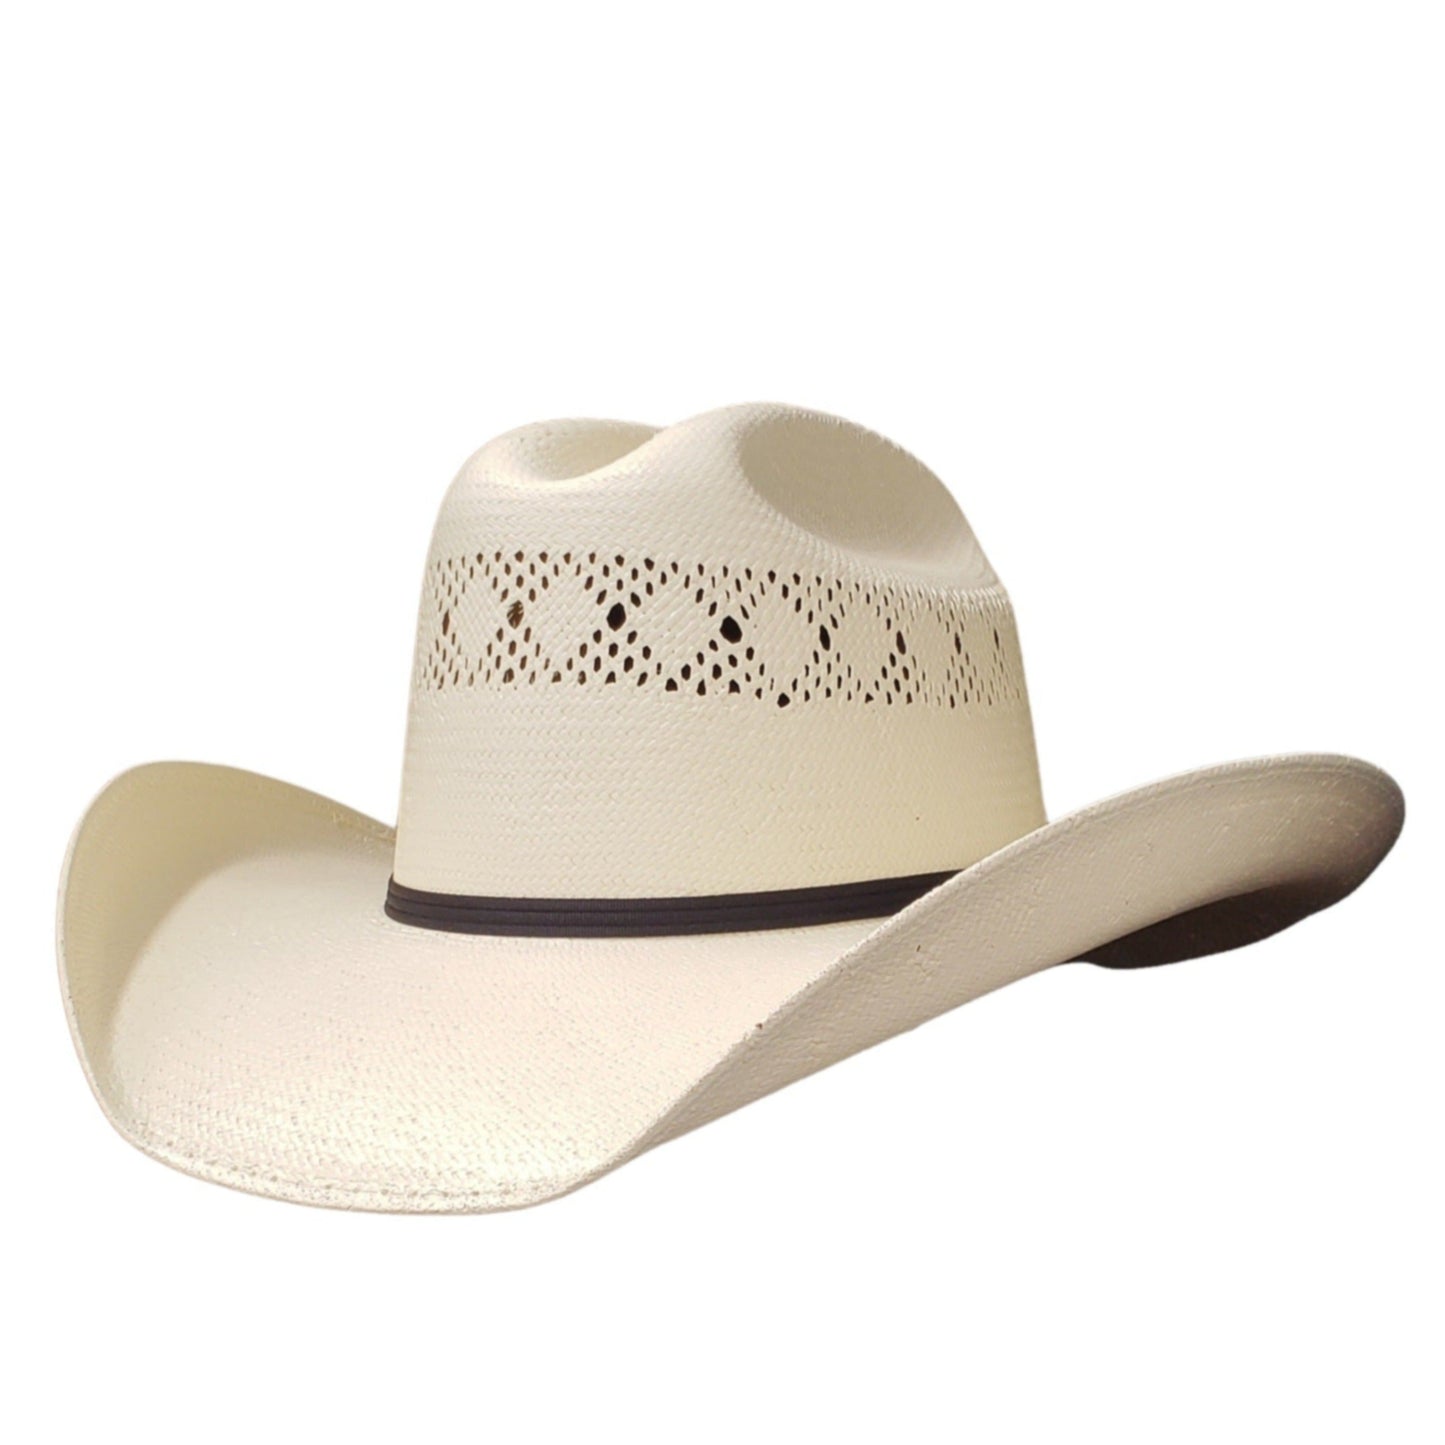   Shantung Authentic Cowboy Hats Near Me